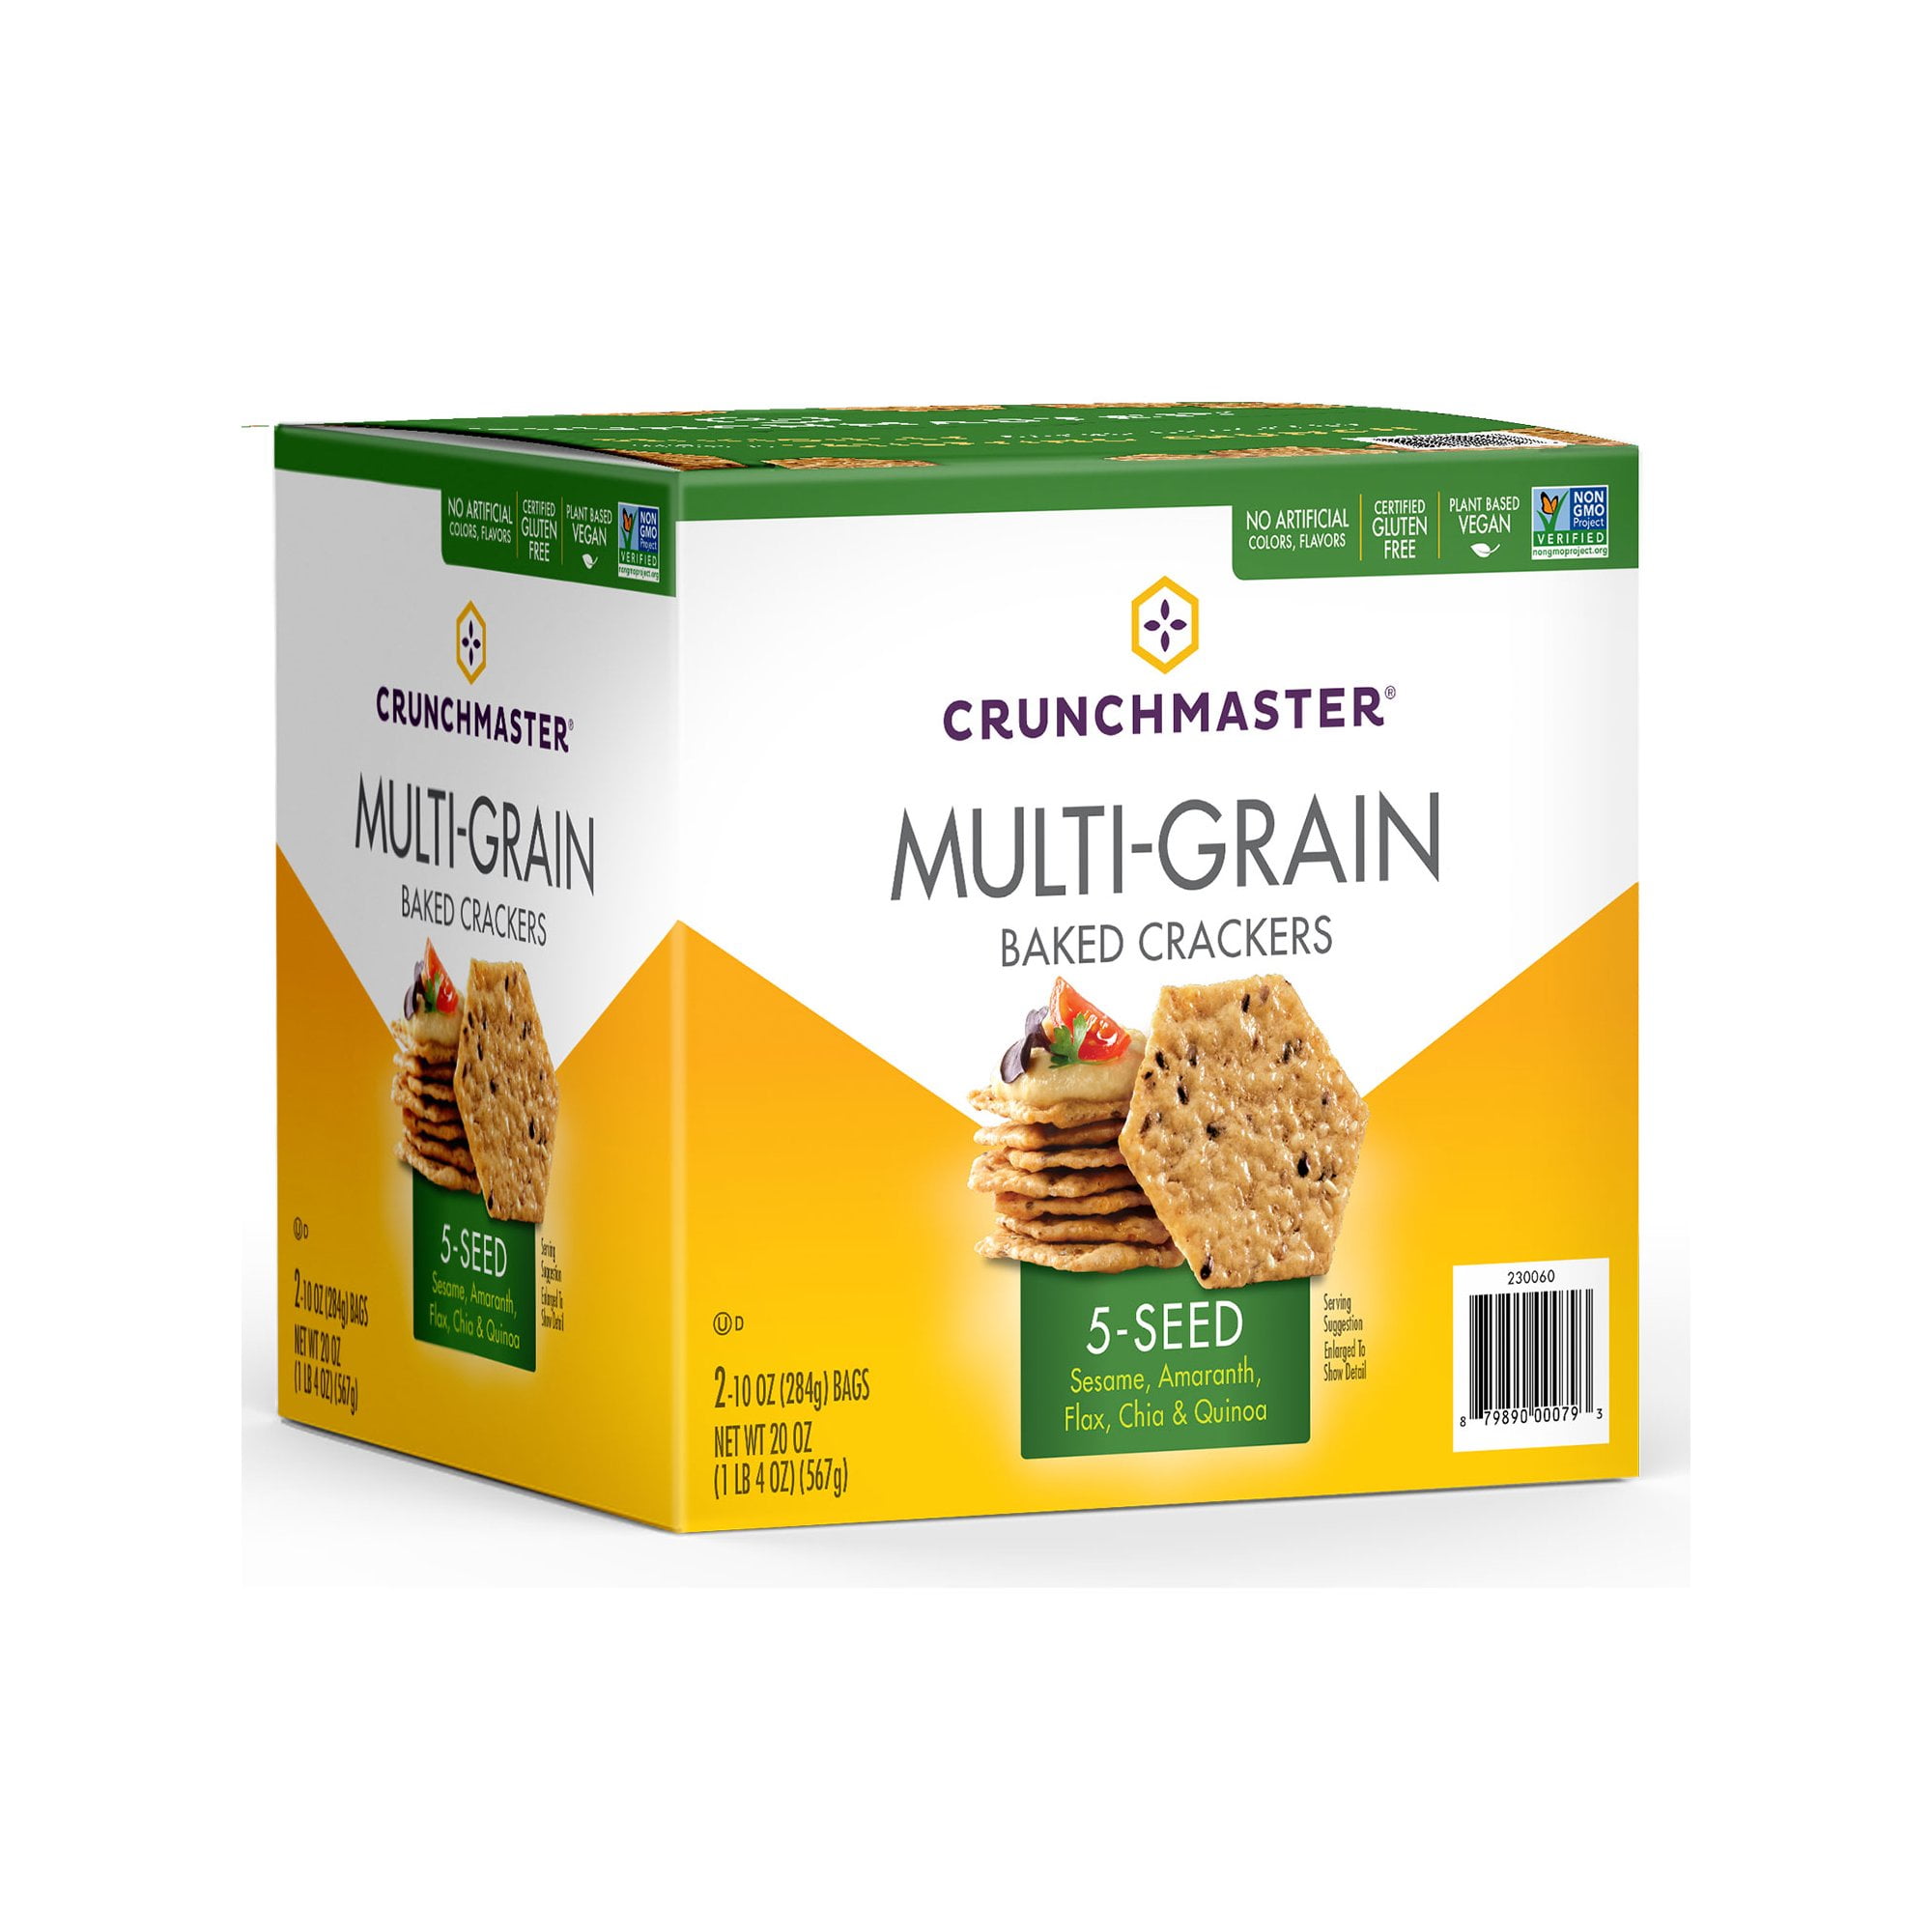 Branded Crunchmaster 5 Seed Multi-Grain Crackers (10 oz., 2 ct.) Pack of 1